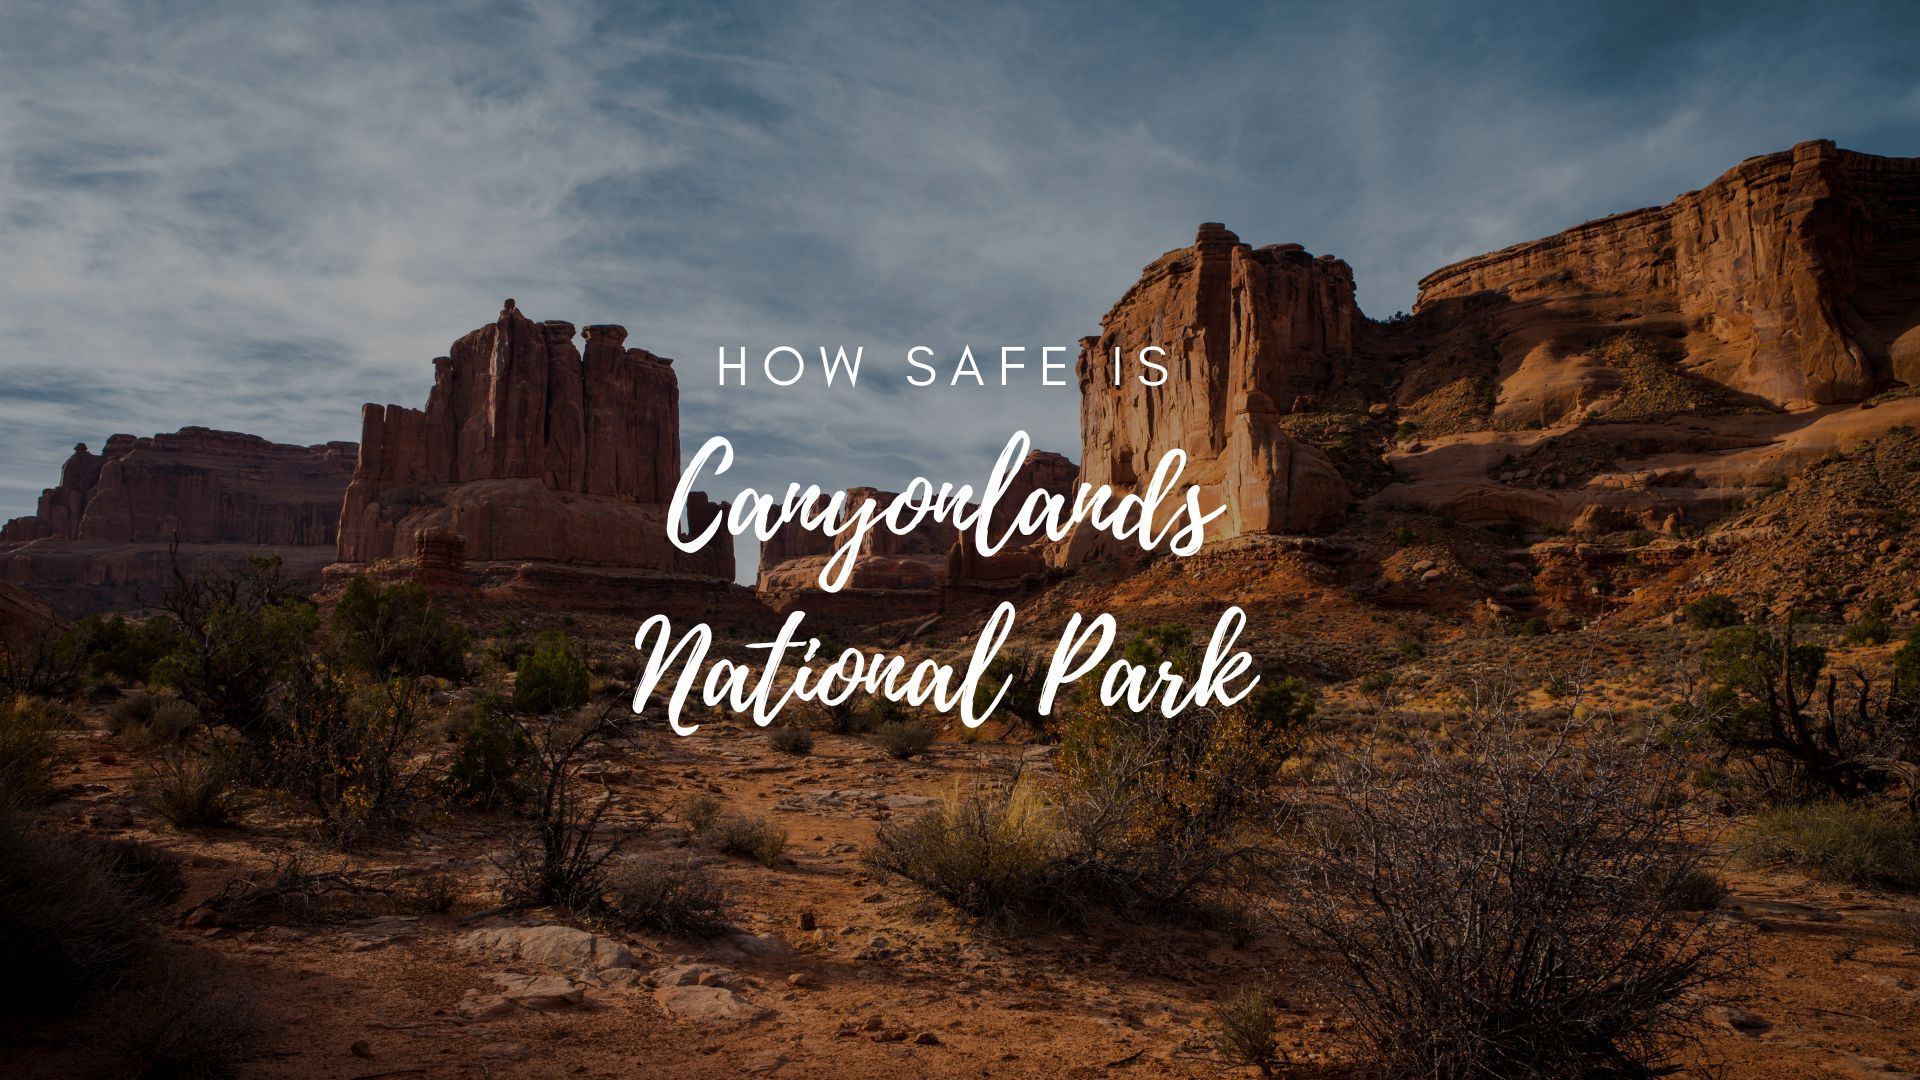 is canyonlands national park safe?